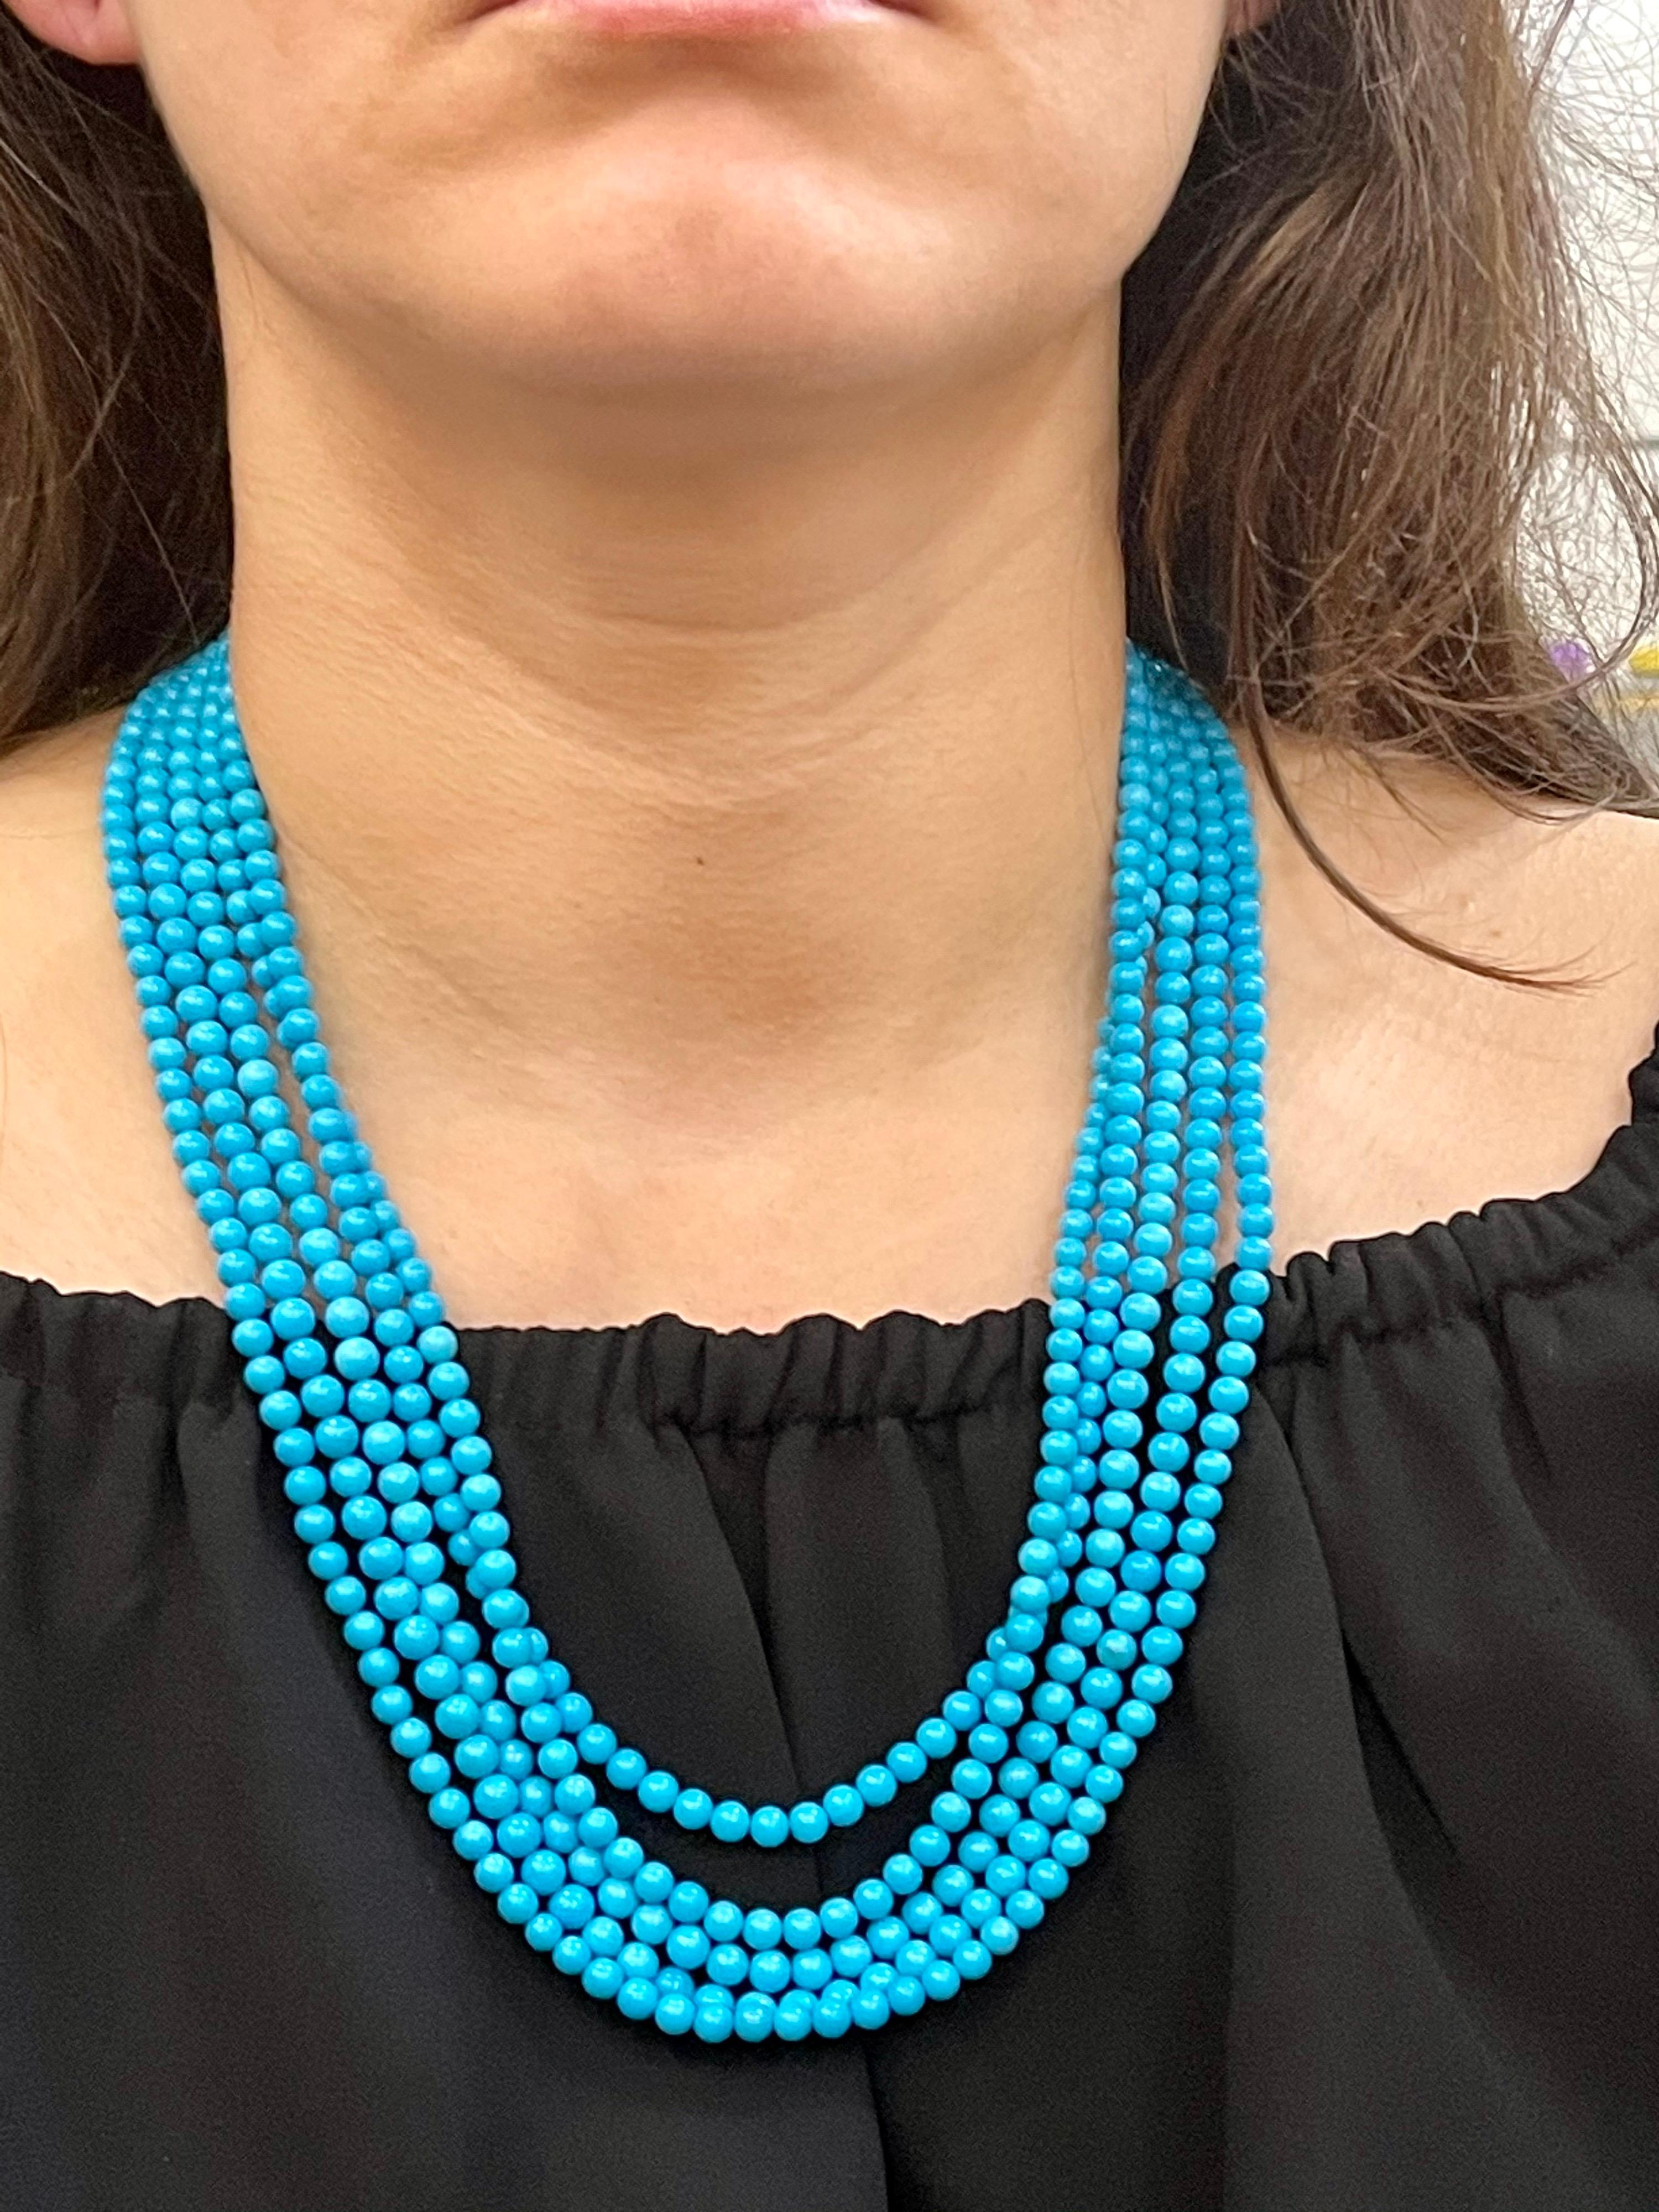 465 Carat Natural Sleeping Beauty Turquoise Necklace, Multi Strand 18 Karat Gold 6